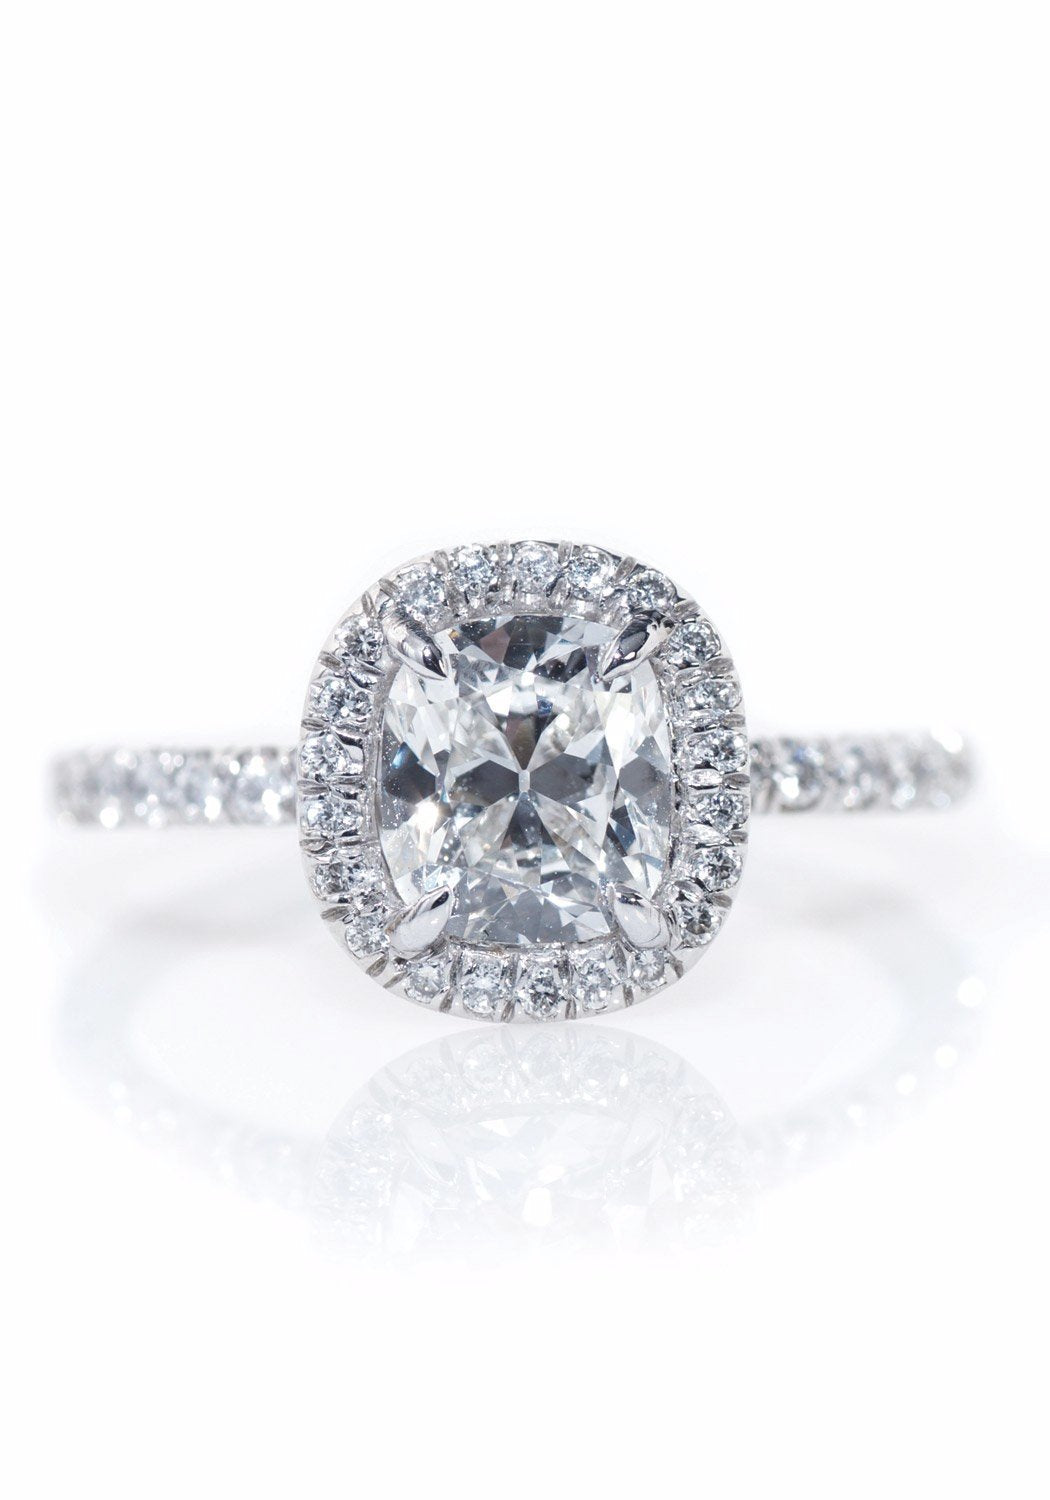 Cushion Cut Halo Diamond Ring | Oster Jewelers 